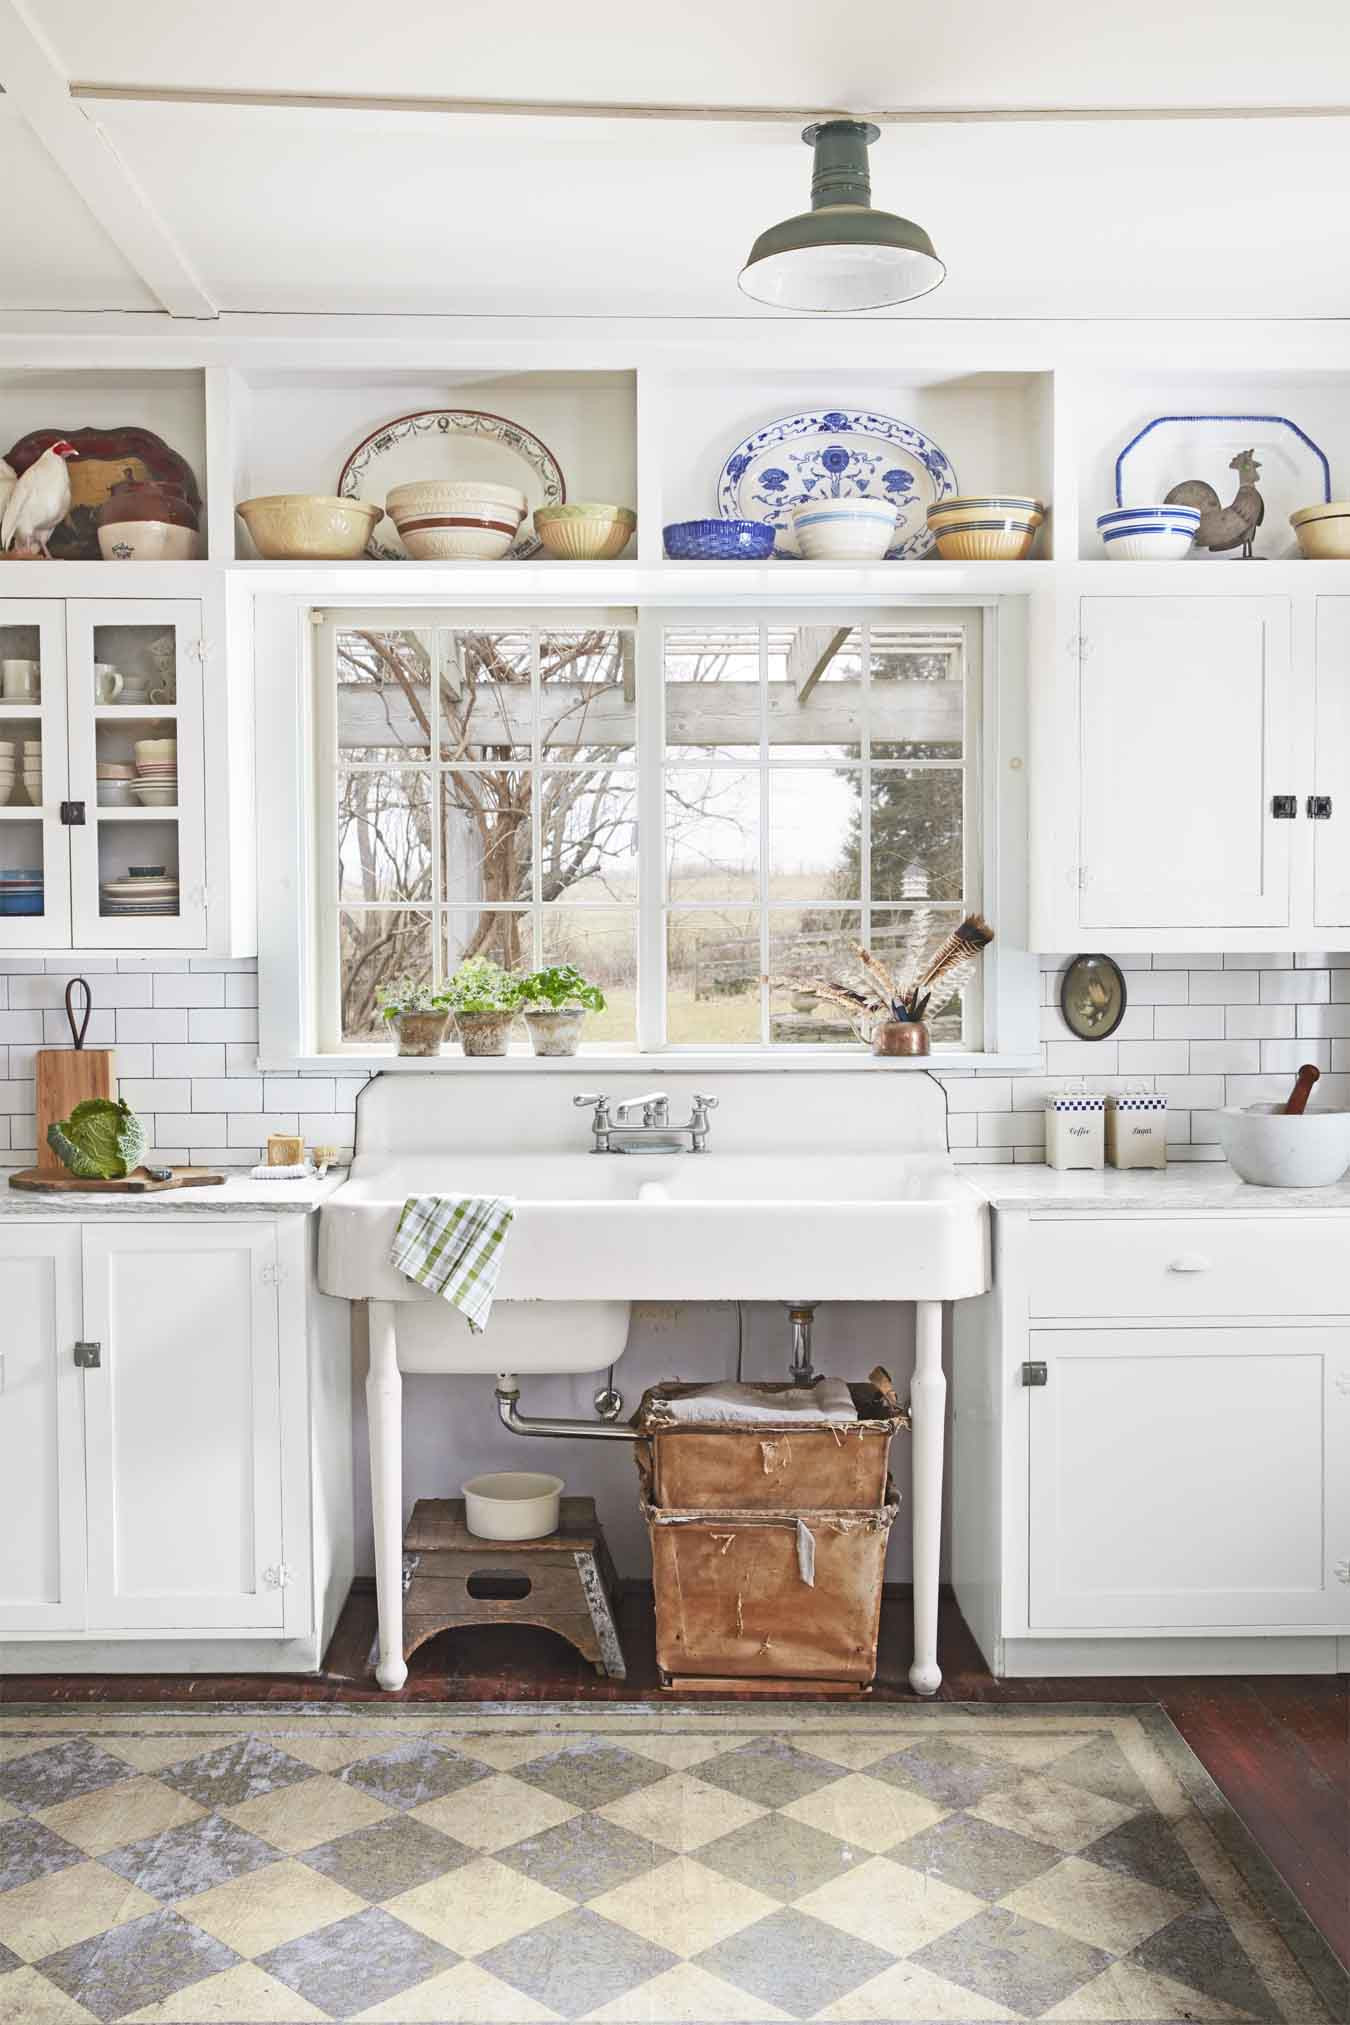 Best ideas about Vintage Kitchen Ideas
. Save or Pin 20 Vintage Kitchen Decorating Ideas Design Inspiration Now.